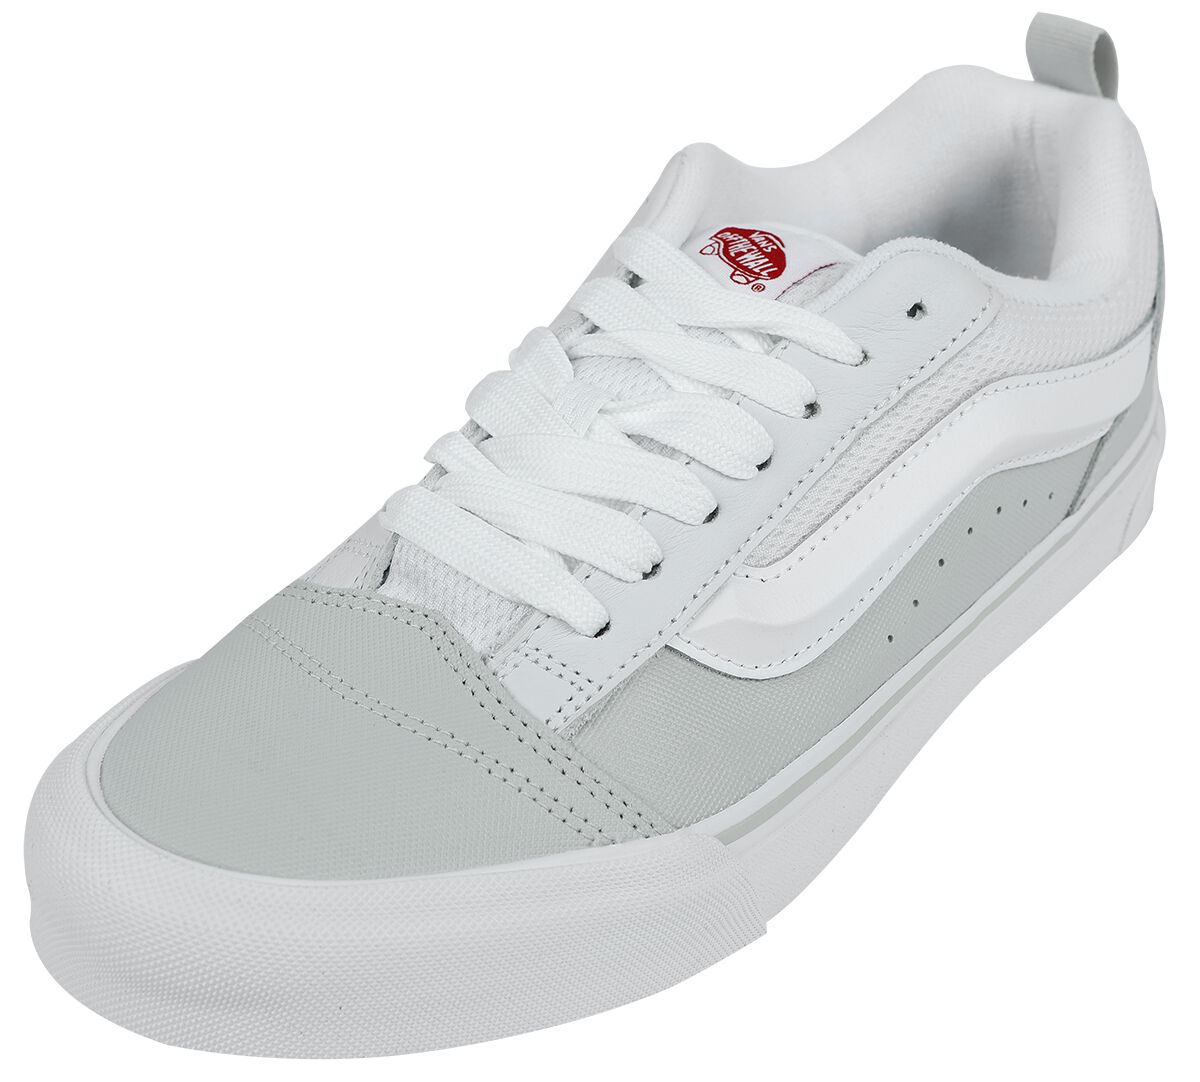 Vans Sneaker - Knu Skool RETRO SKATE - EU41 bis EU46 - für Männer - Größe EU46 - weiß